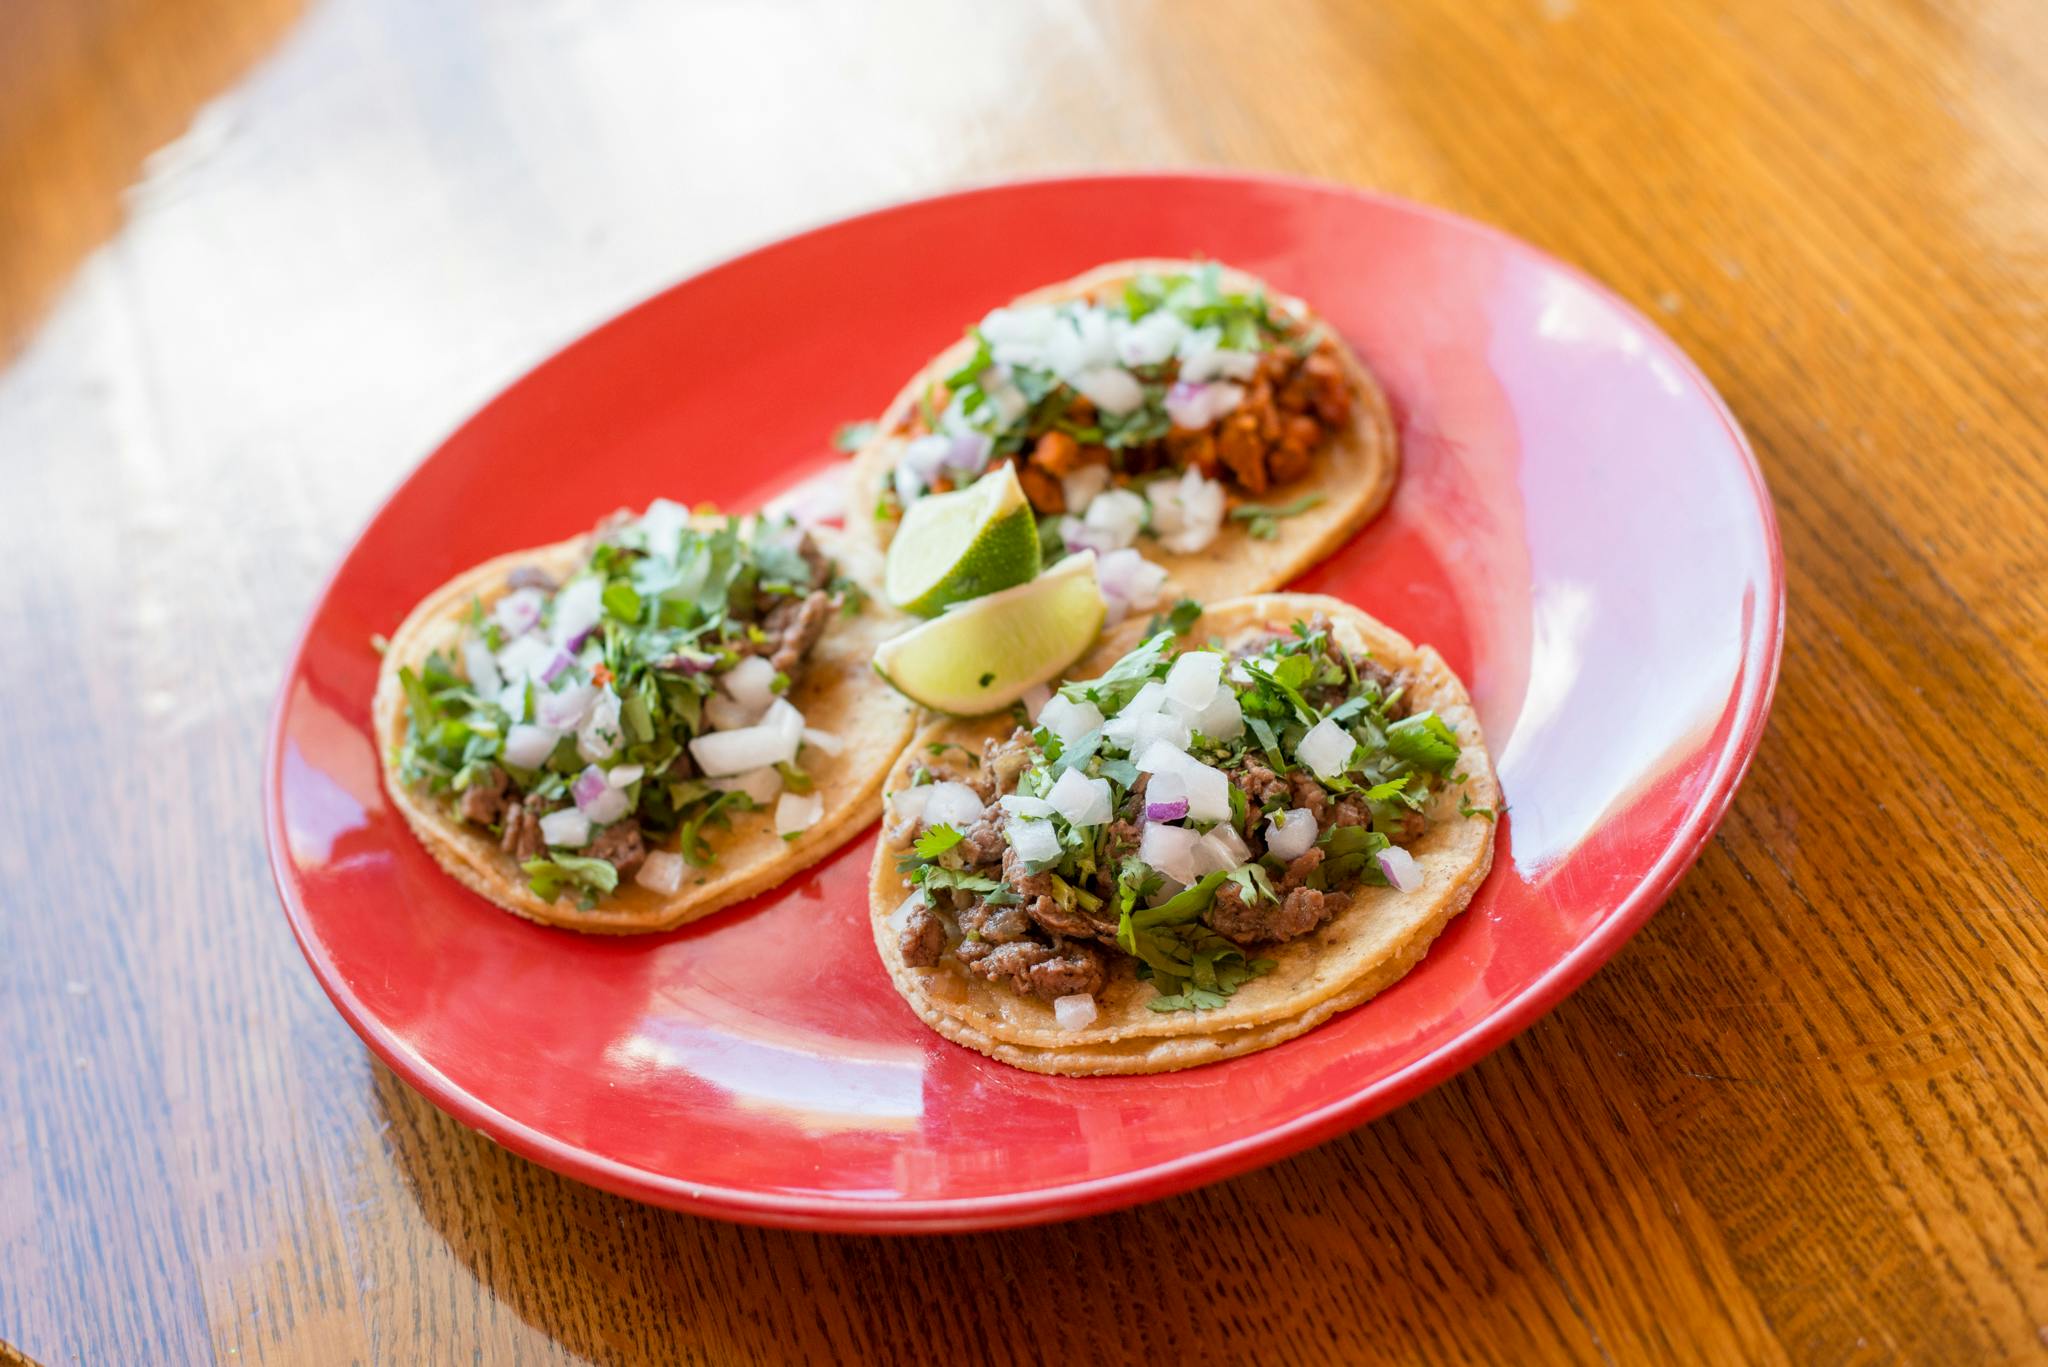 Mexican Style Taco from Taqueria Maldonado's - Main Street in Green Bay, WI